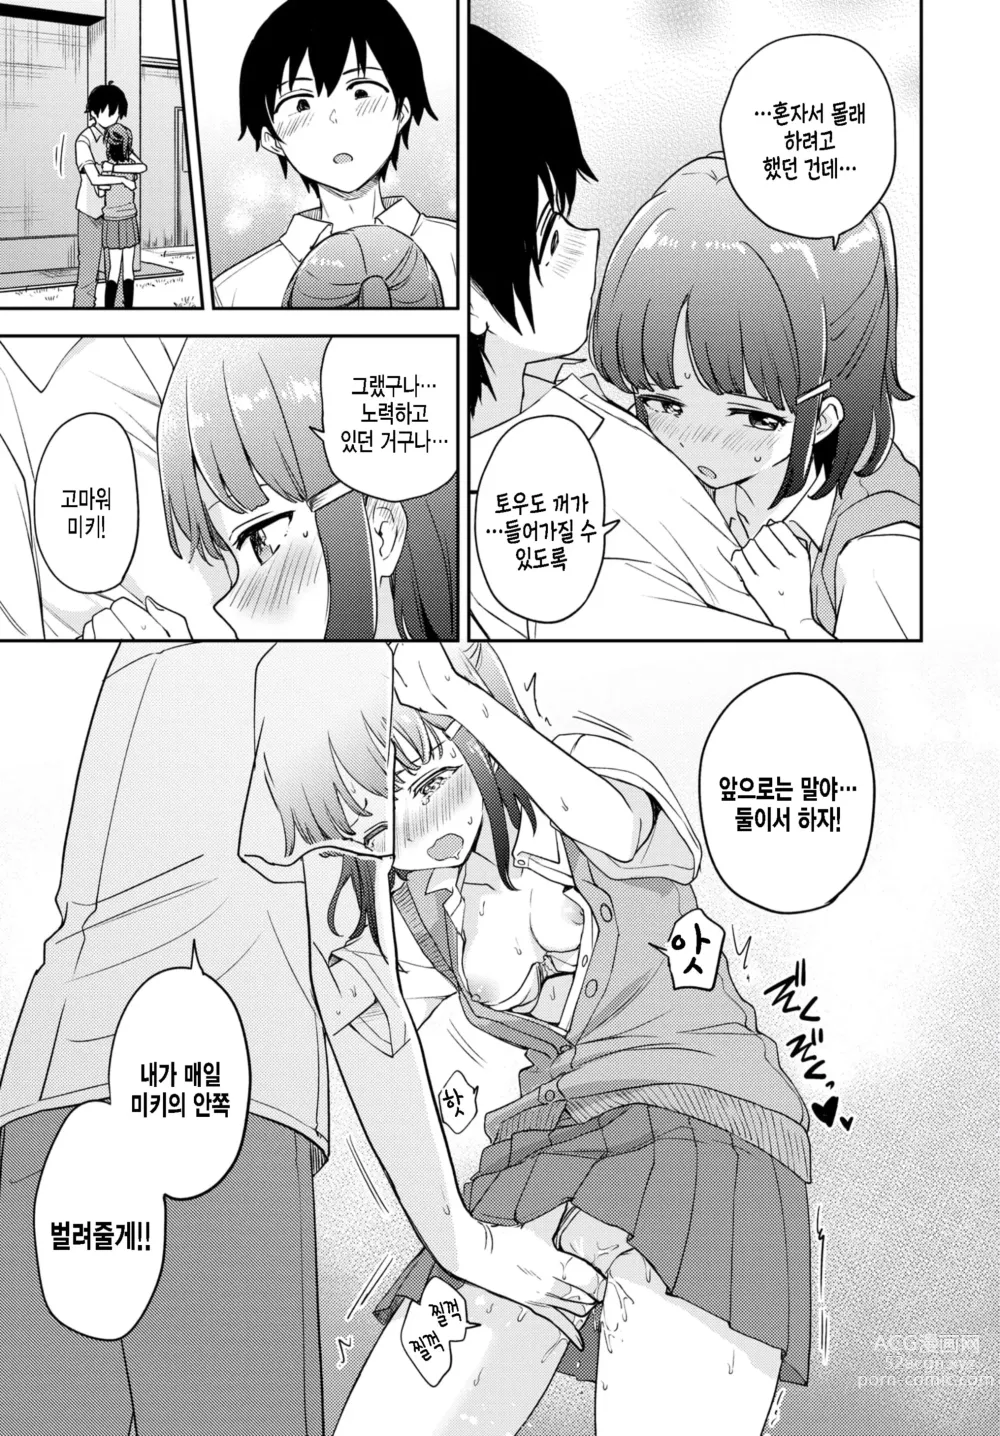 Page 7 of manga step by step